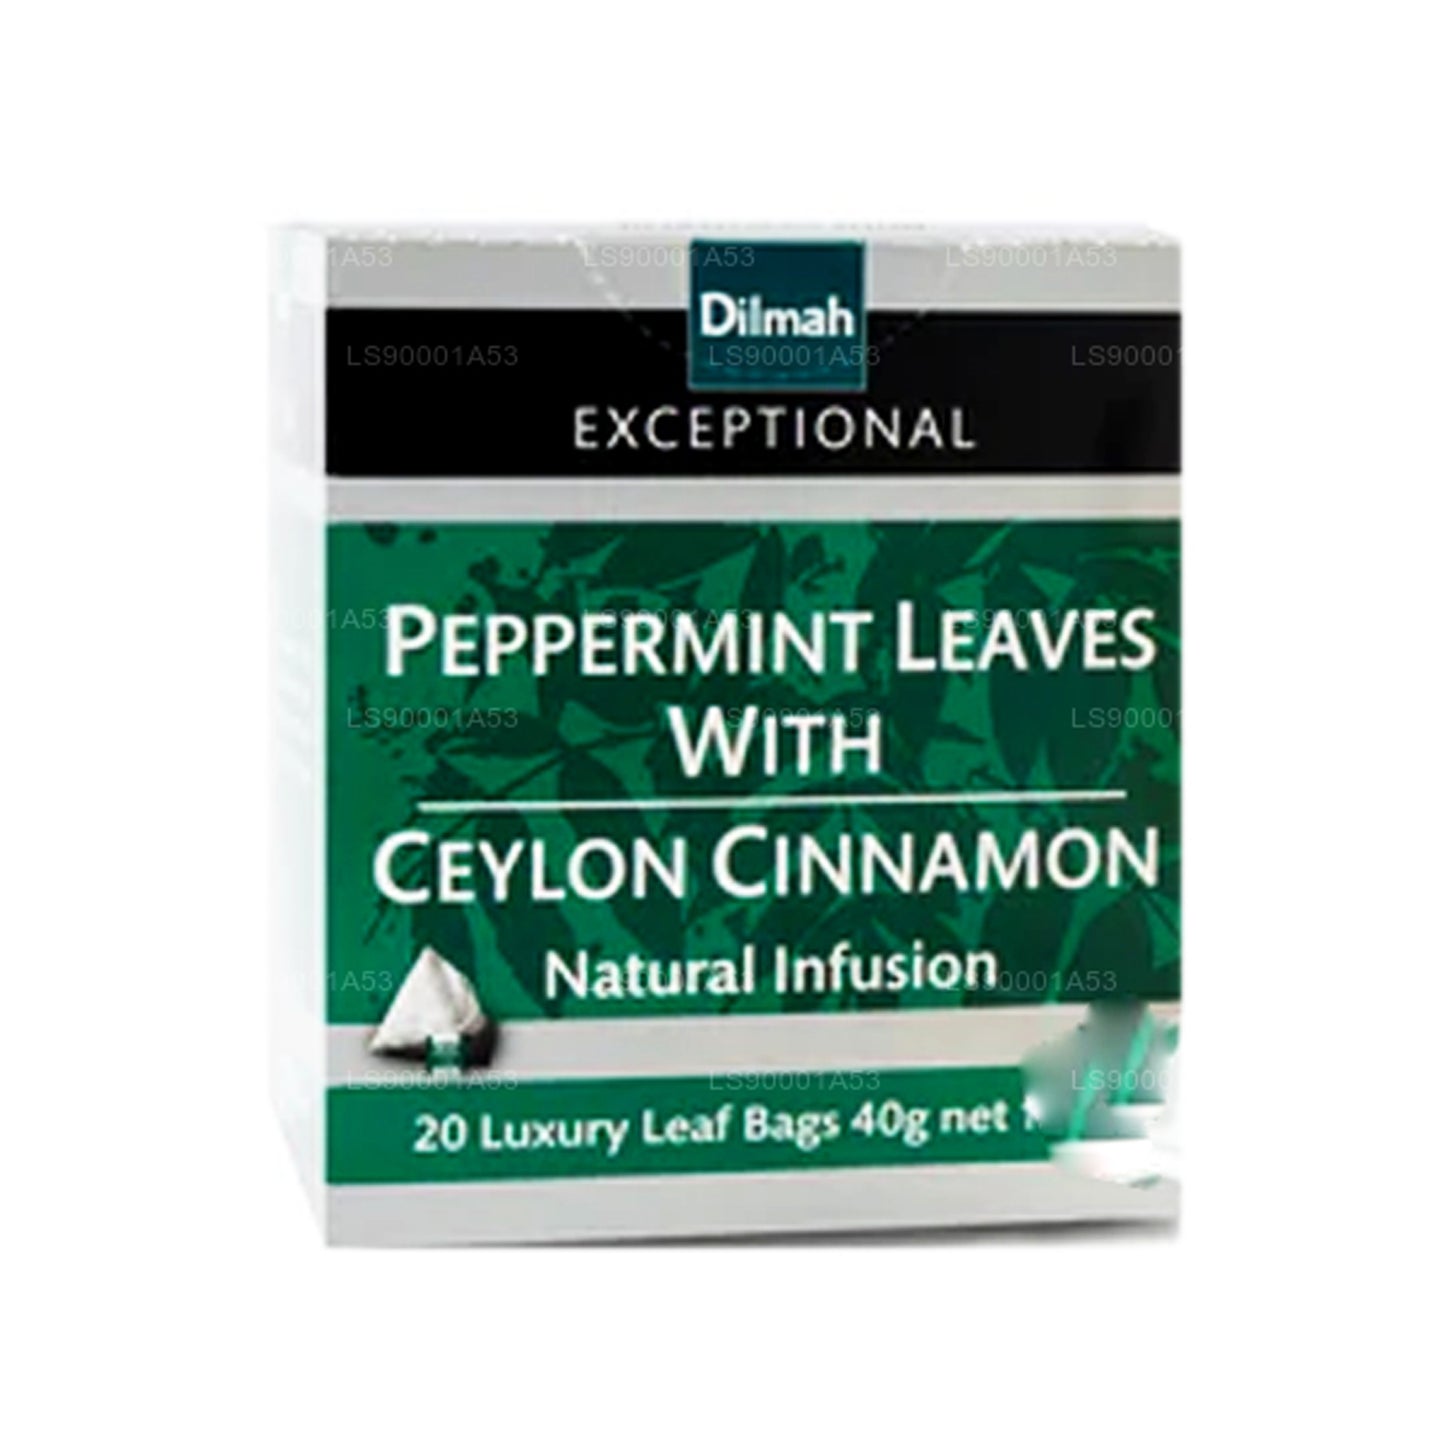 Dilmah Exceptional Peppermint Leaves With Ceylon Cinnamon (20 Leaf Tea Bags)